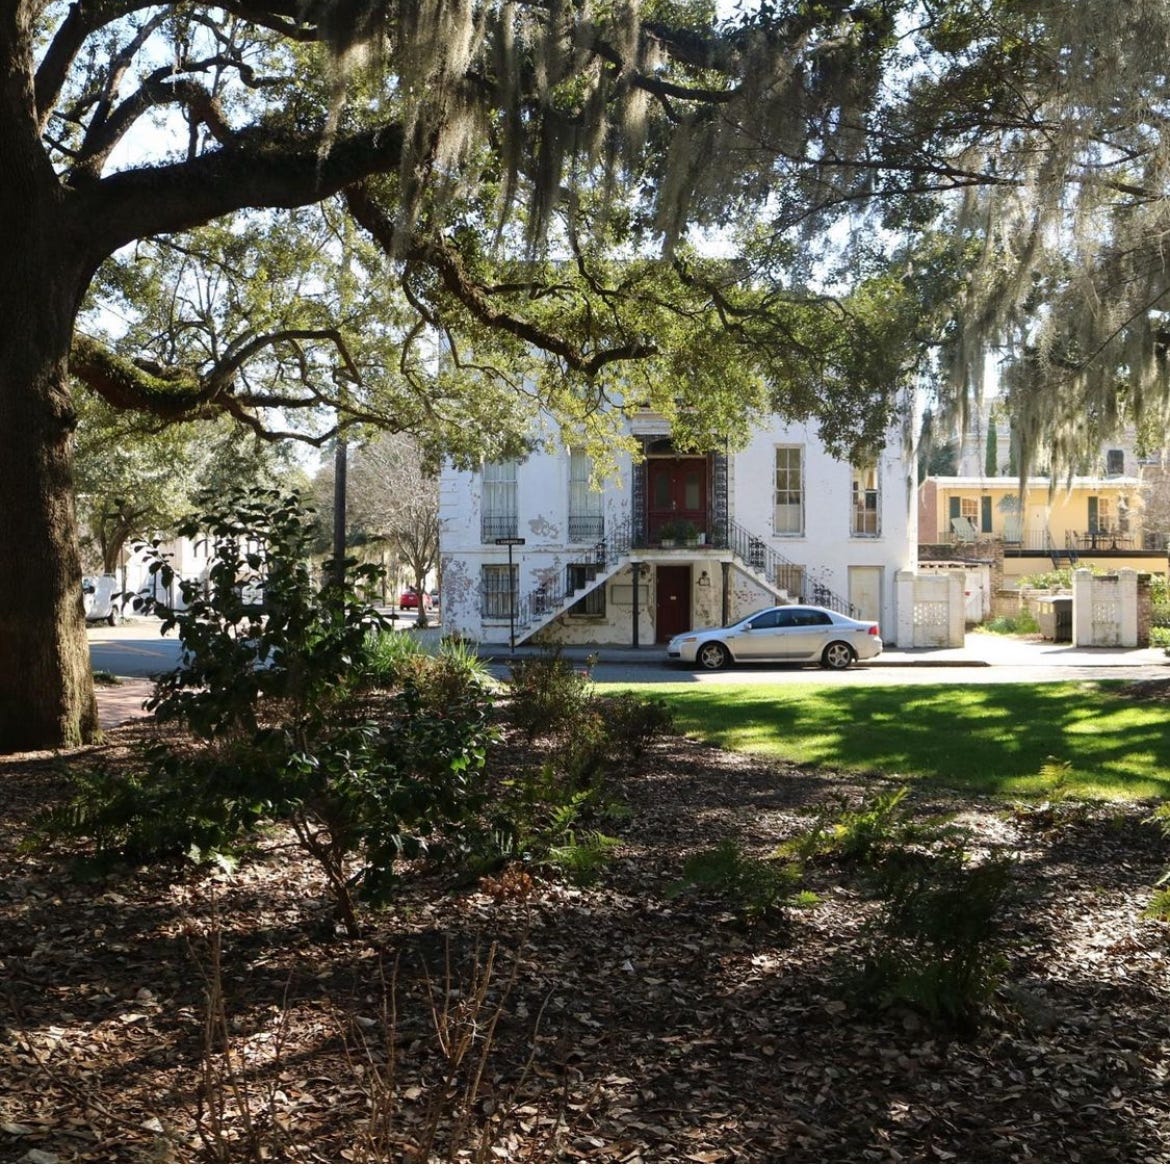 Image: Typical Savannah home hiding behind Spanish moss